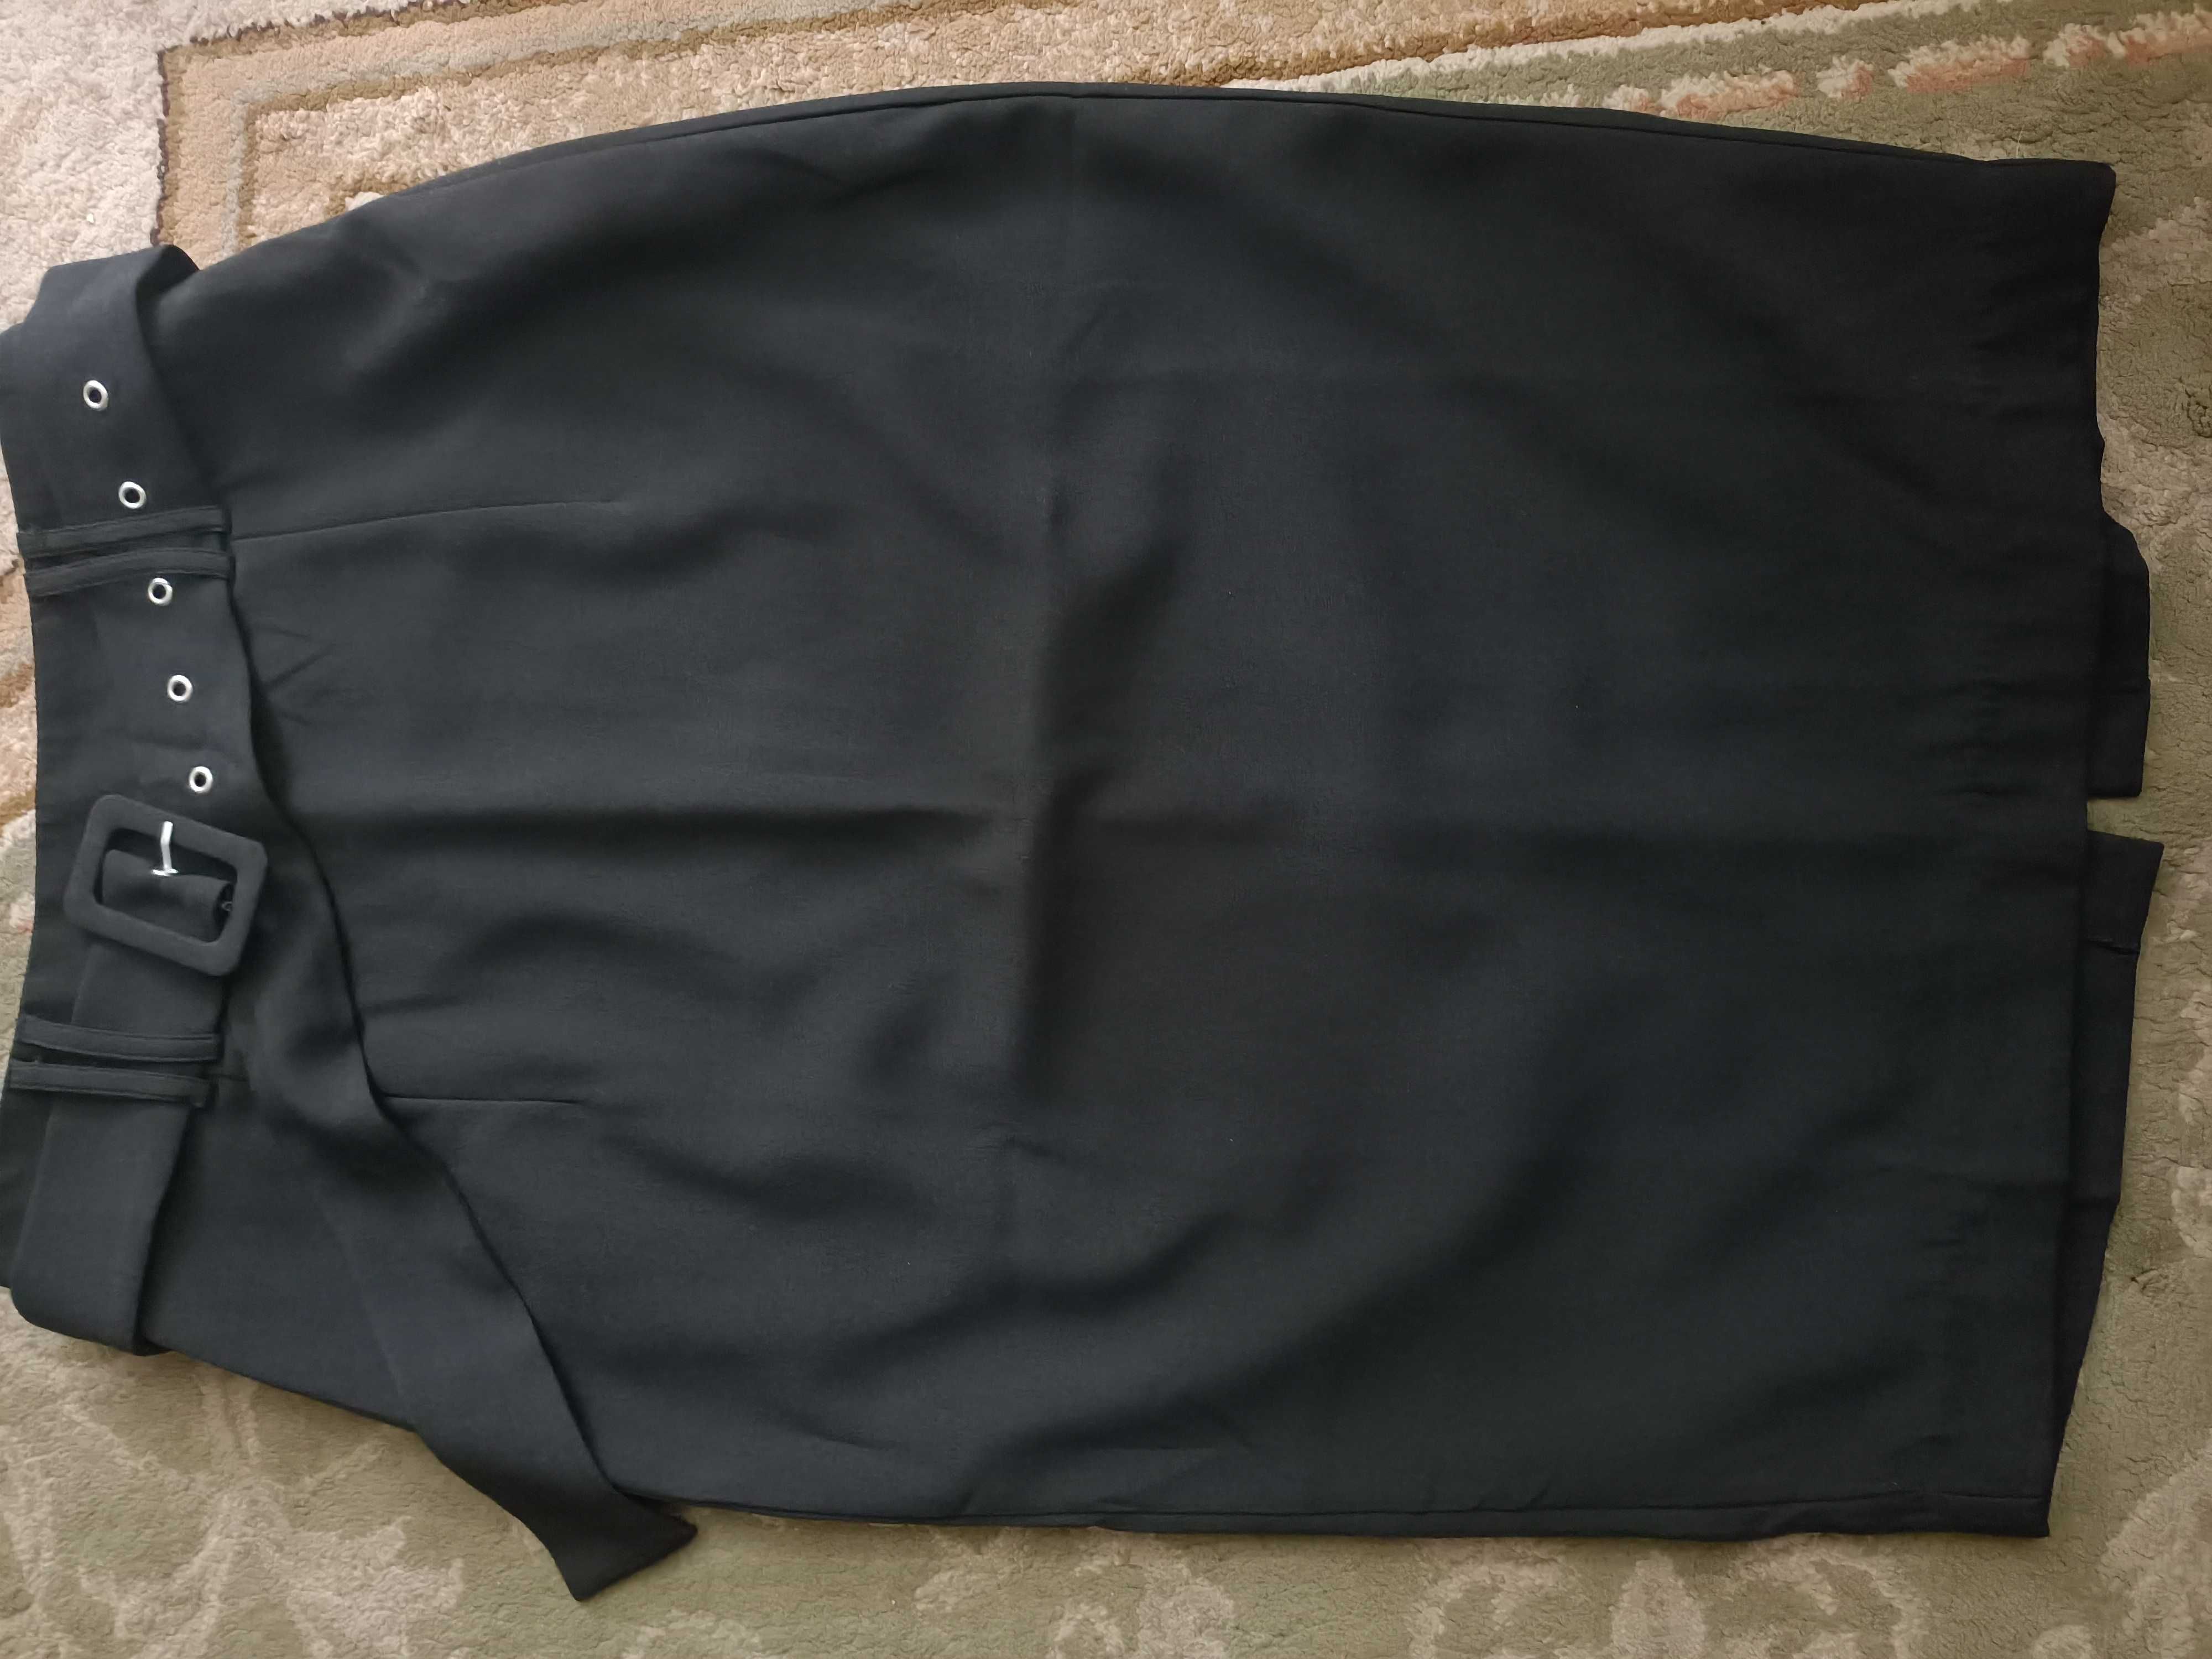 Spódnica damska czarna, klasyczna, rozmiar 38, marka Monnari.